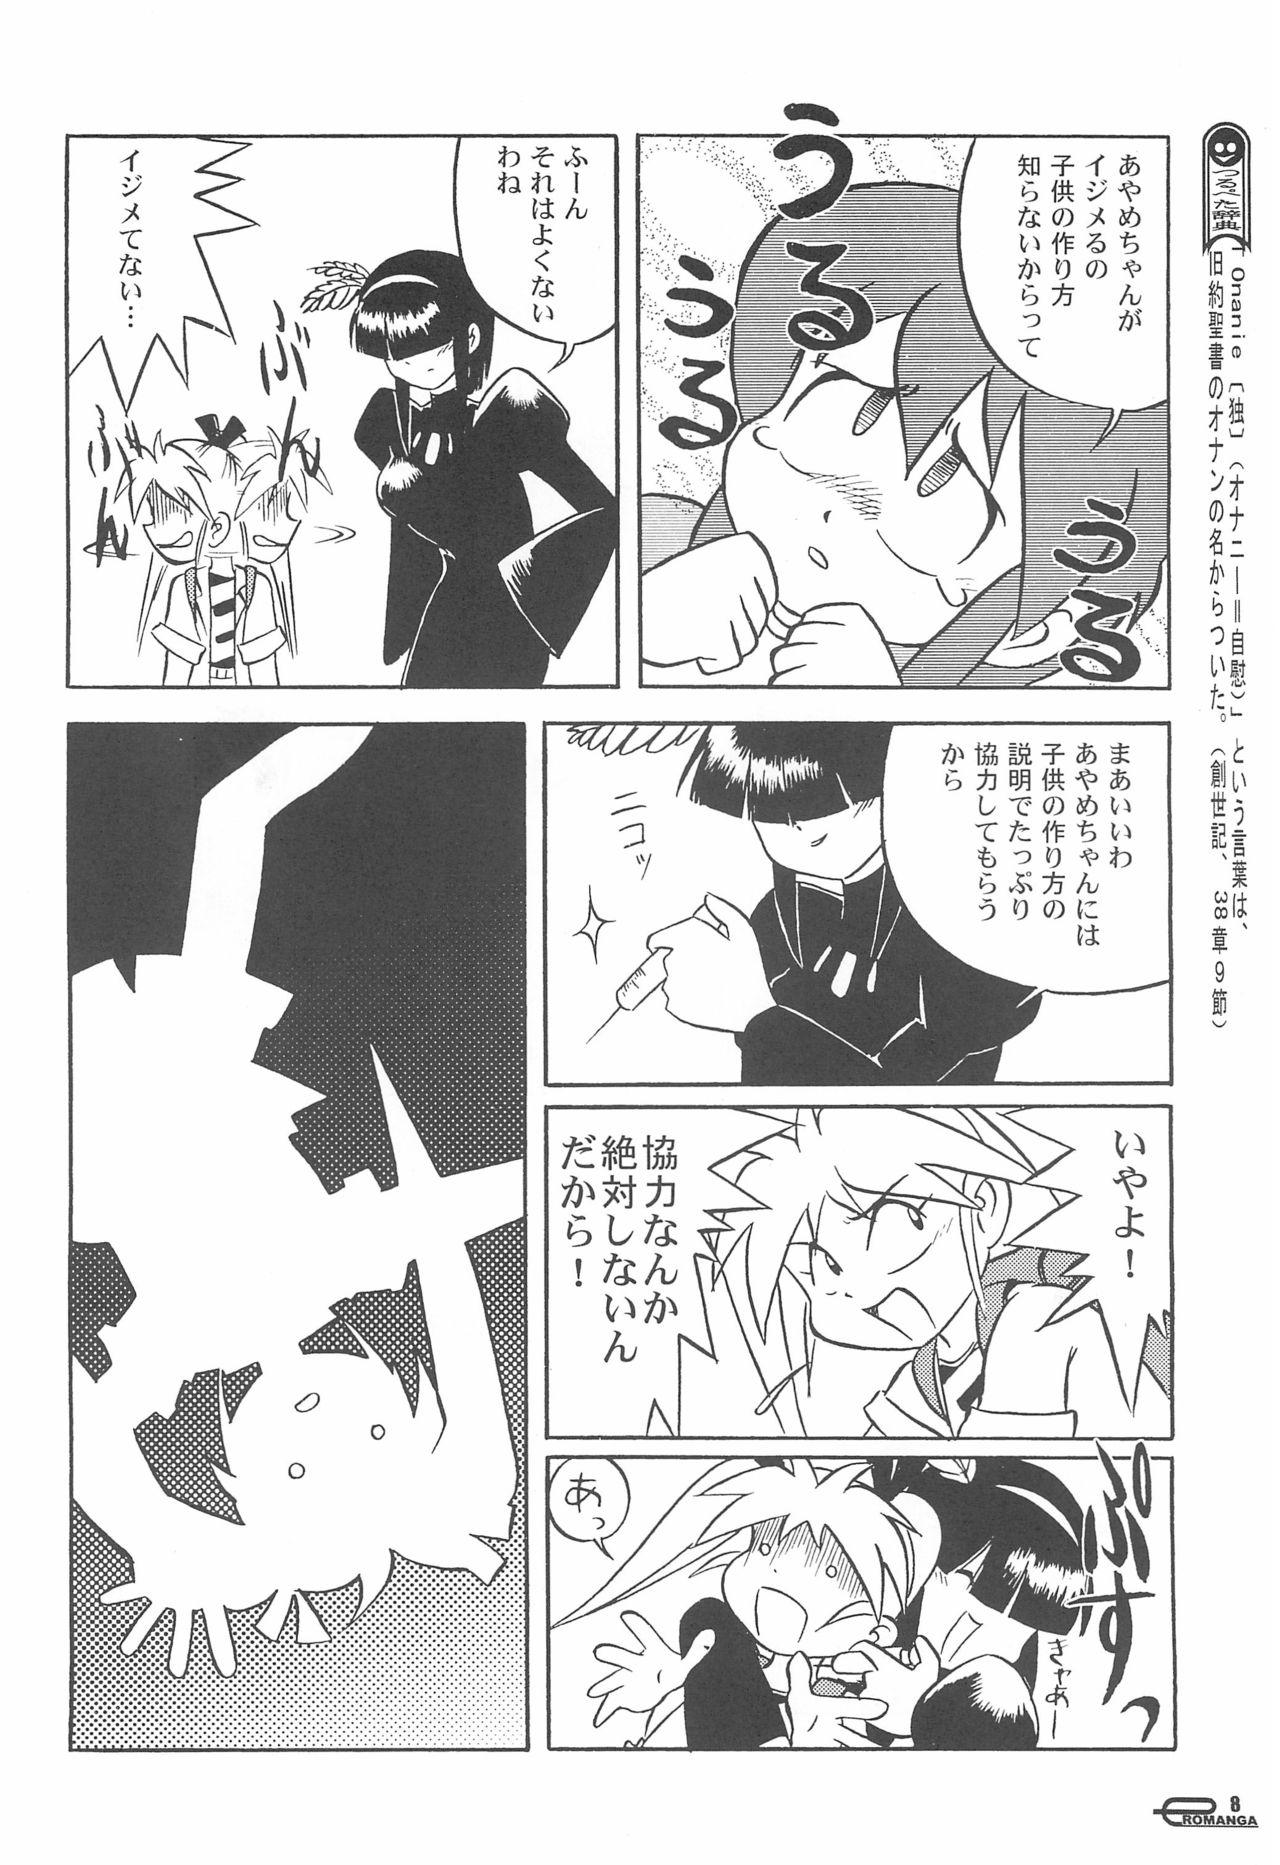 European Manga Science Onna no ko no Himitsu - Manga science Sucking - Page 10